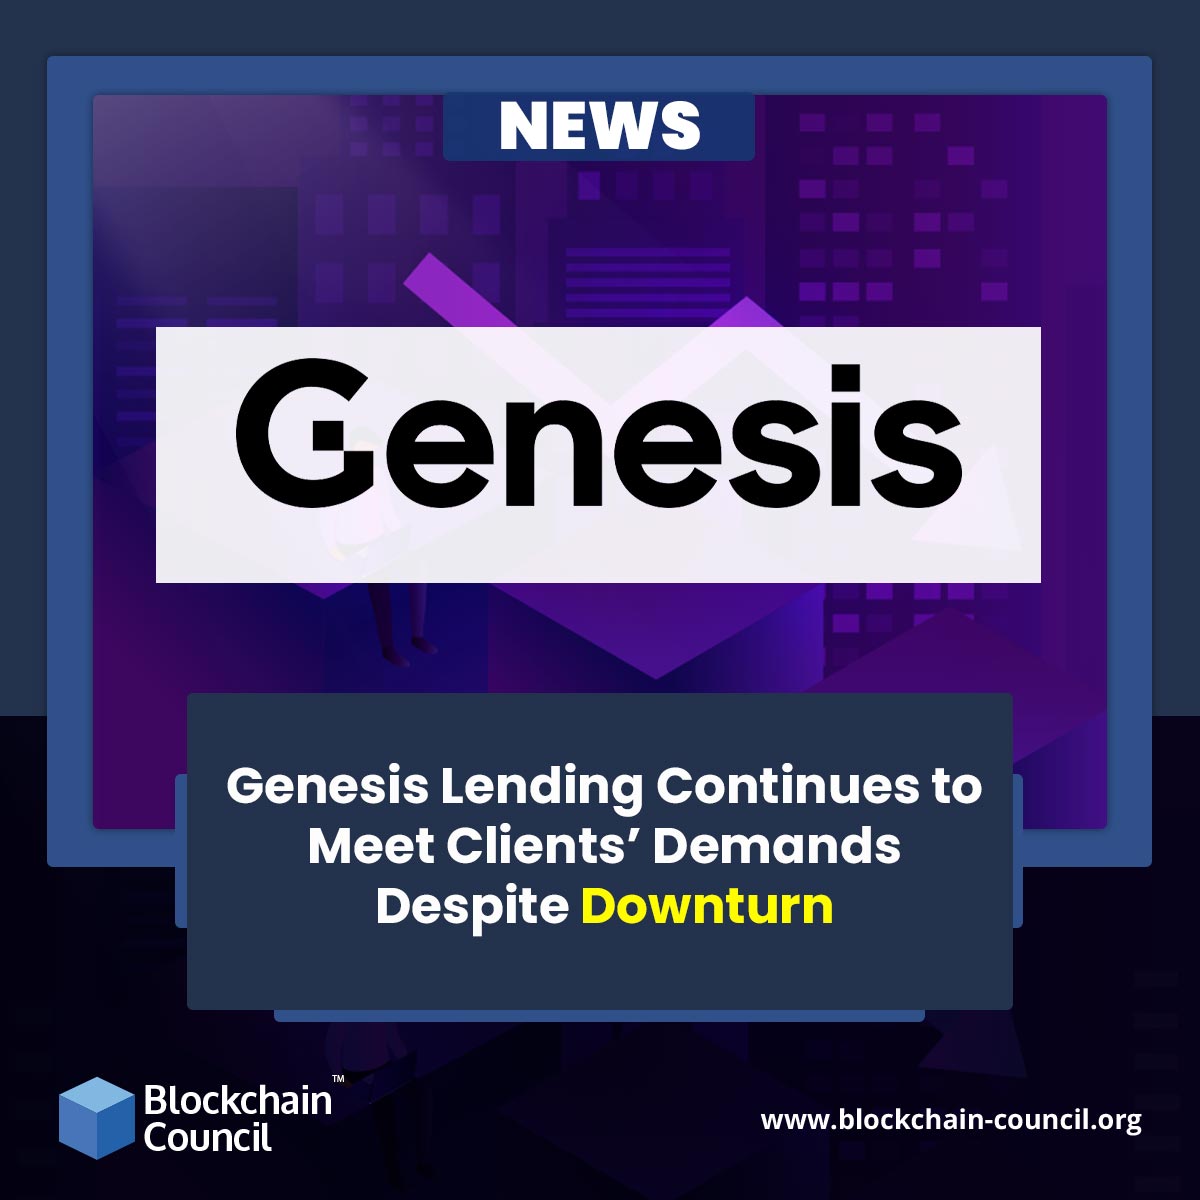 Genesis Lending Continues to Meet Clients’ Demands Despite Downturn